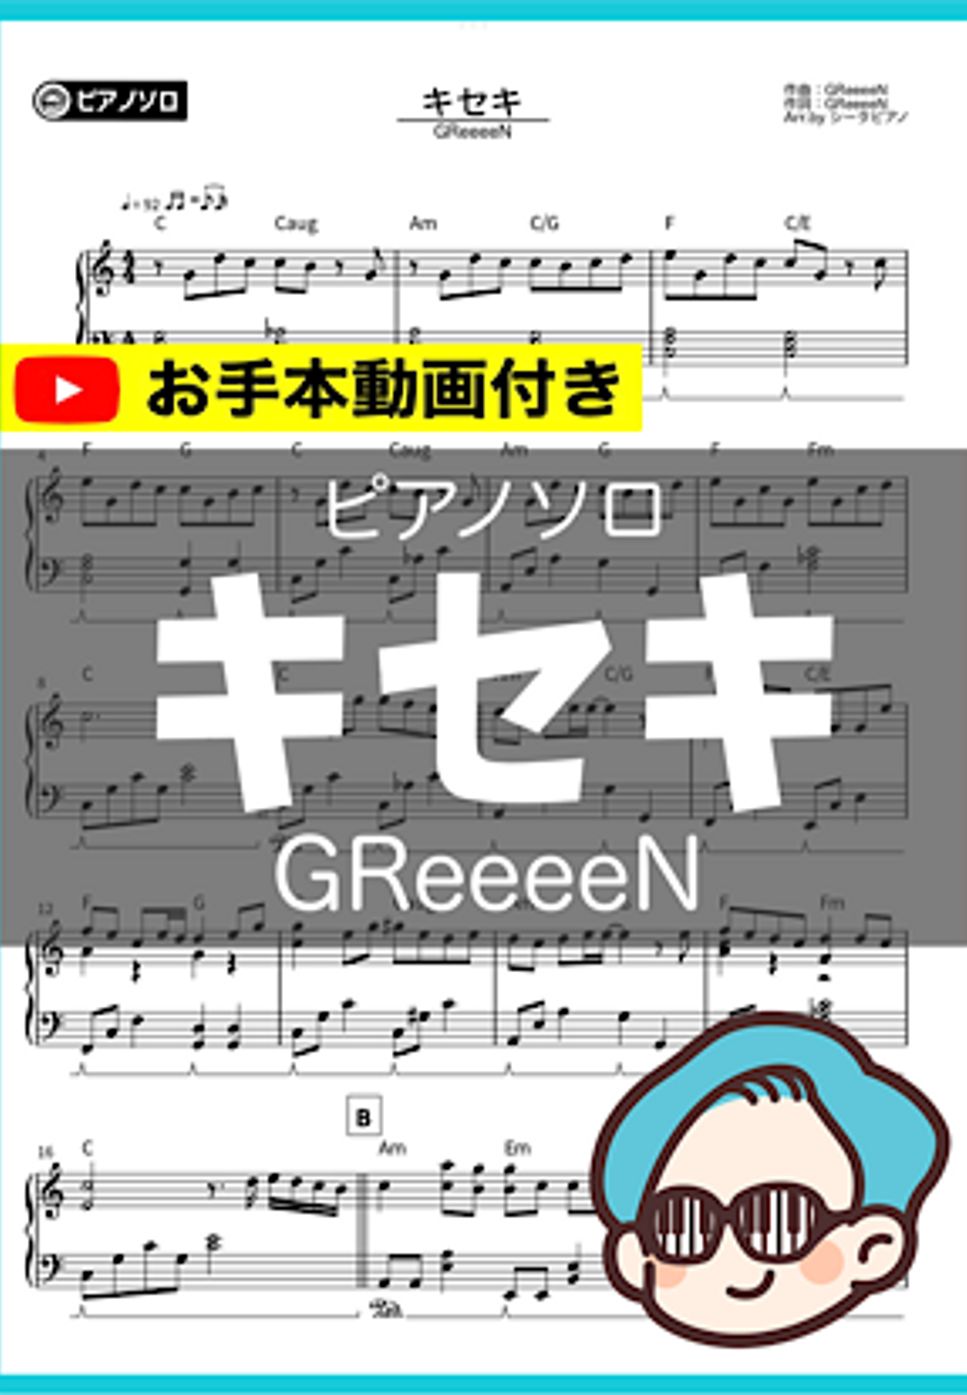 GReeeeN - キセキ by シータピアノ